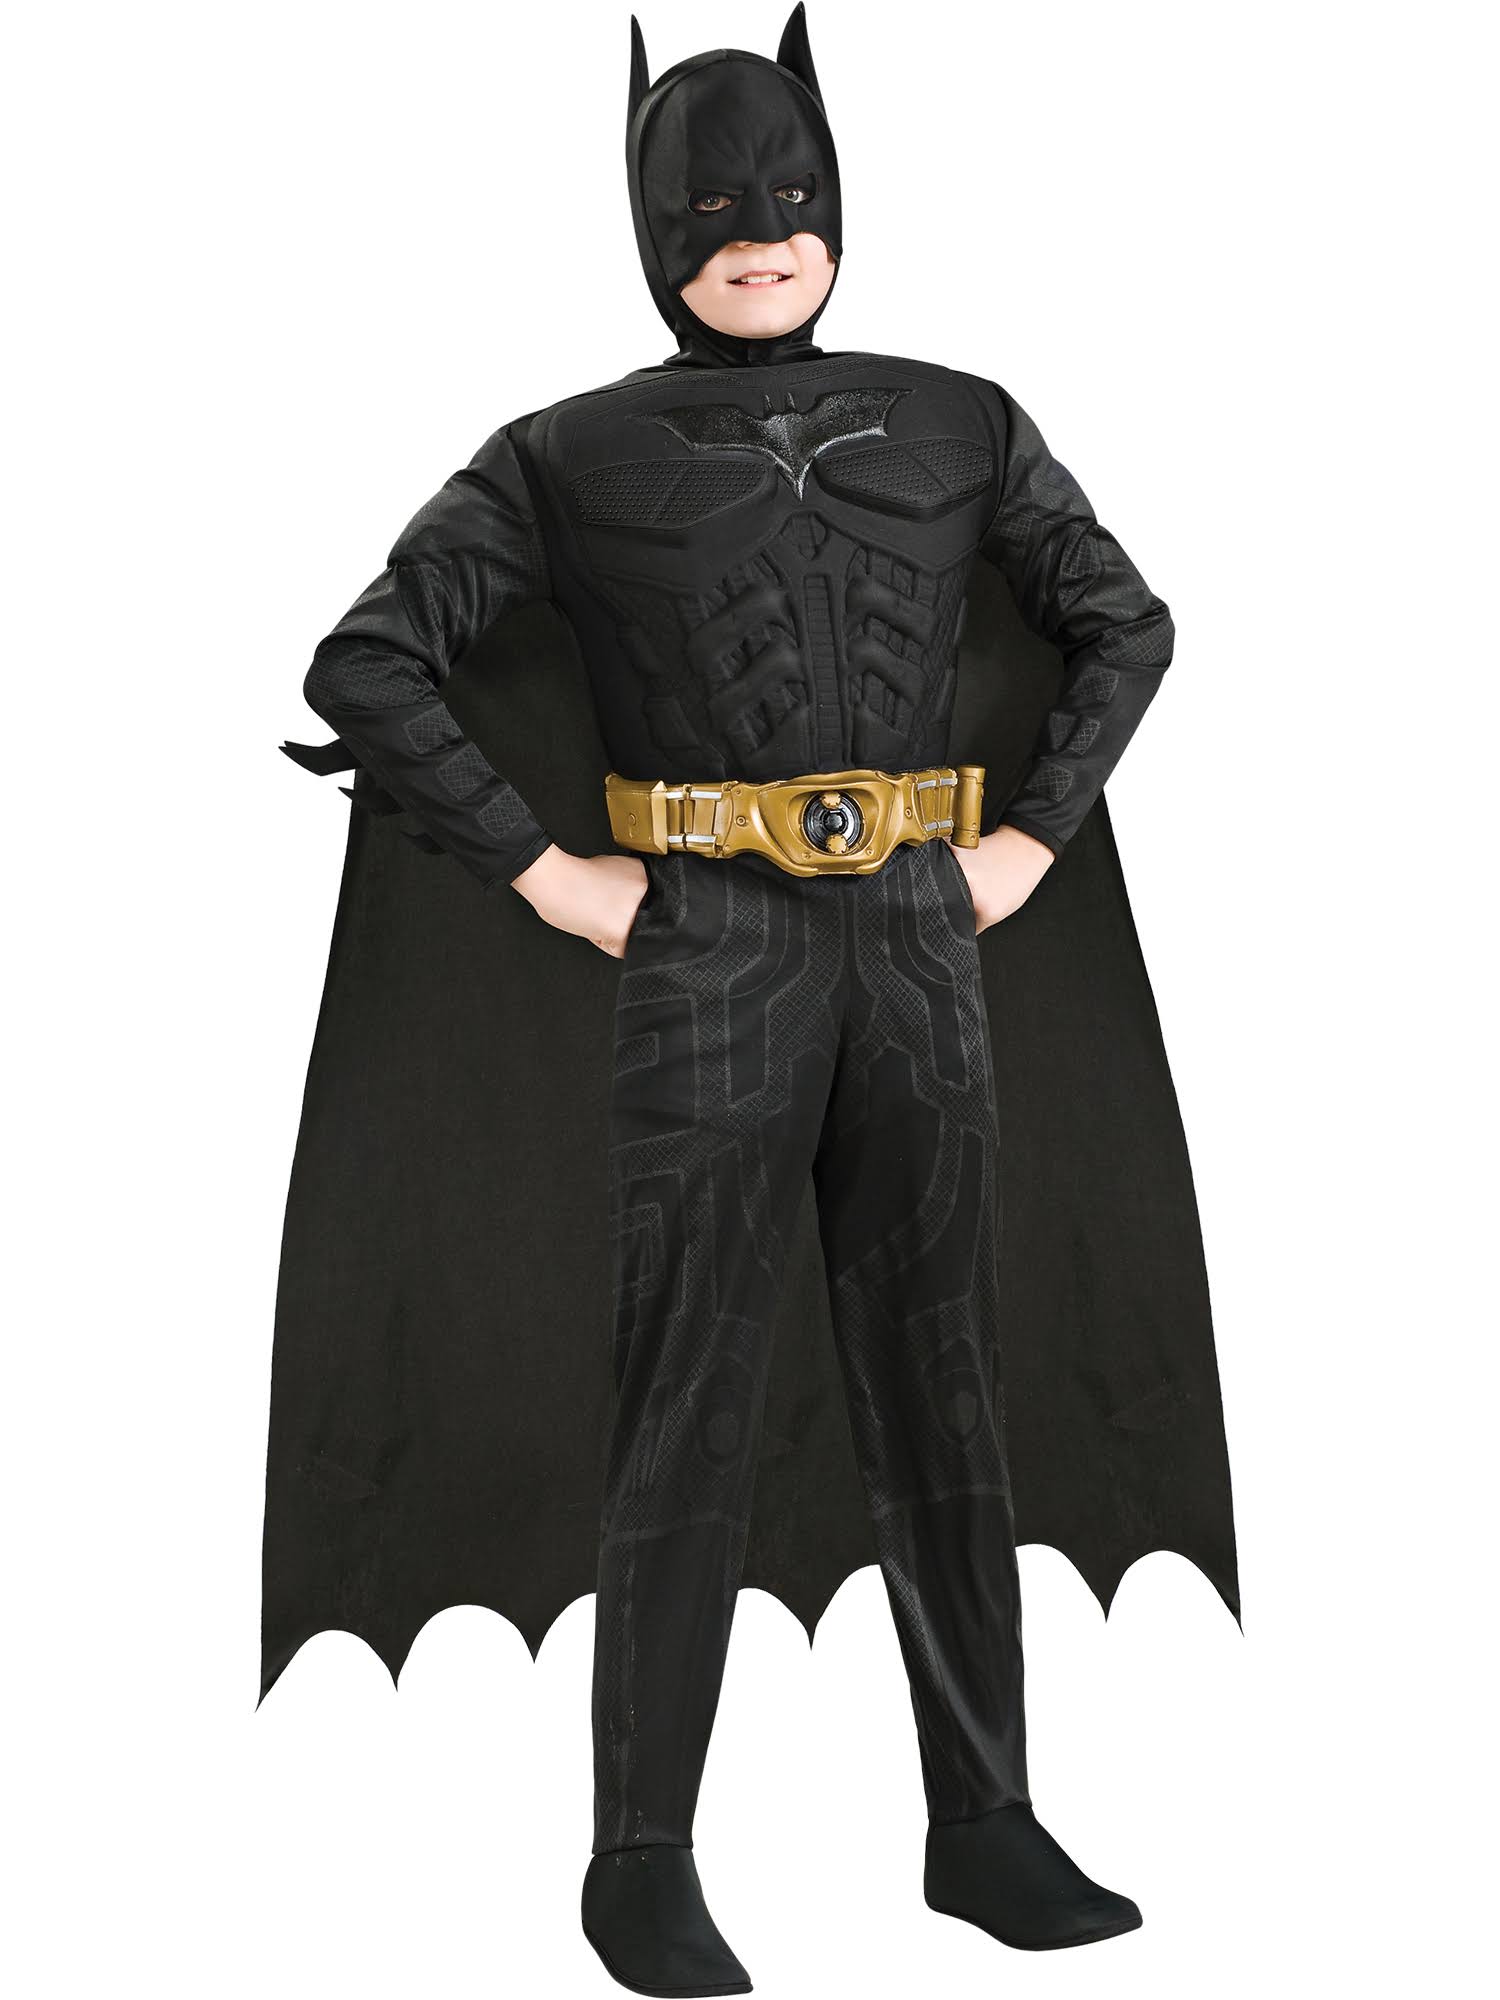 Rubies Costume Co Dark Knight Batman Deluxe Costume